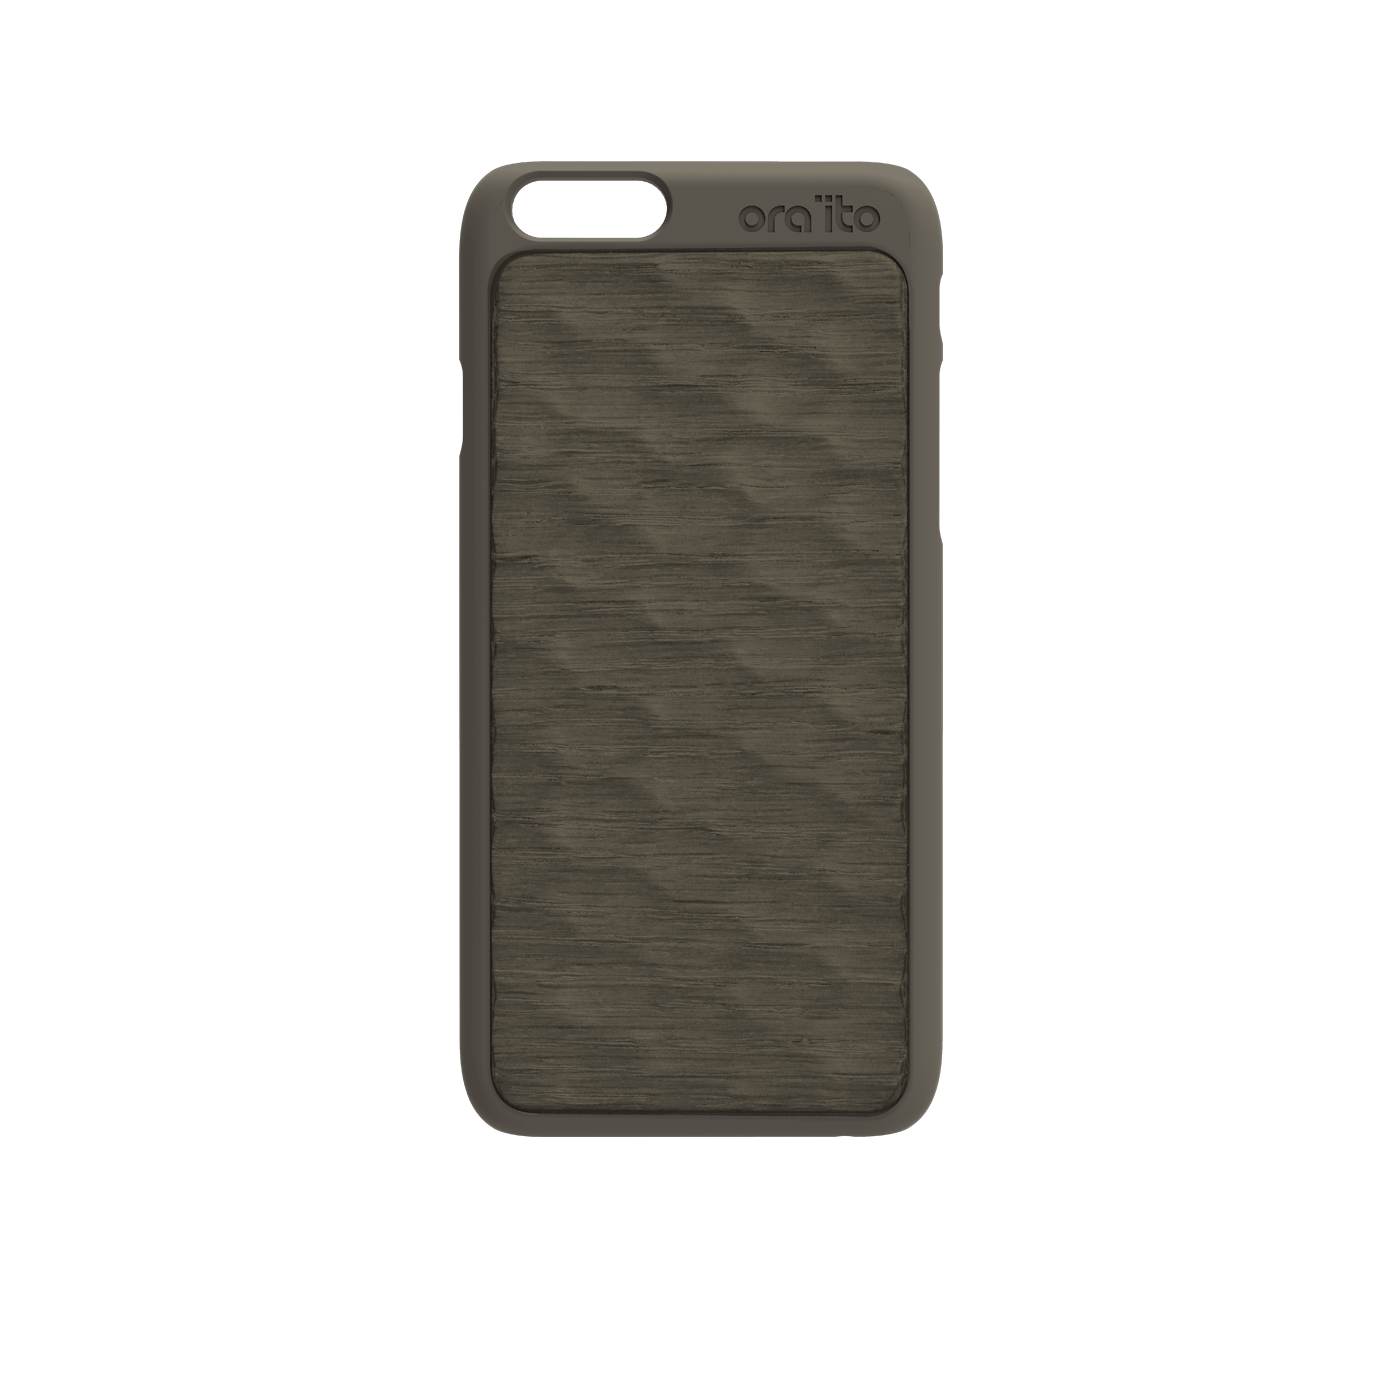 Ïta - Rigid cover for Smartphones